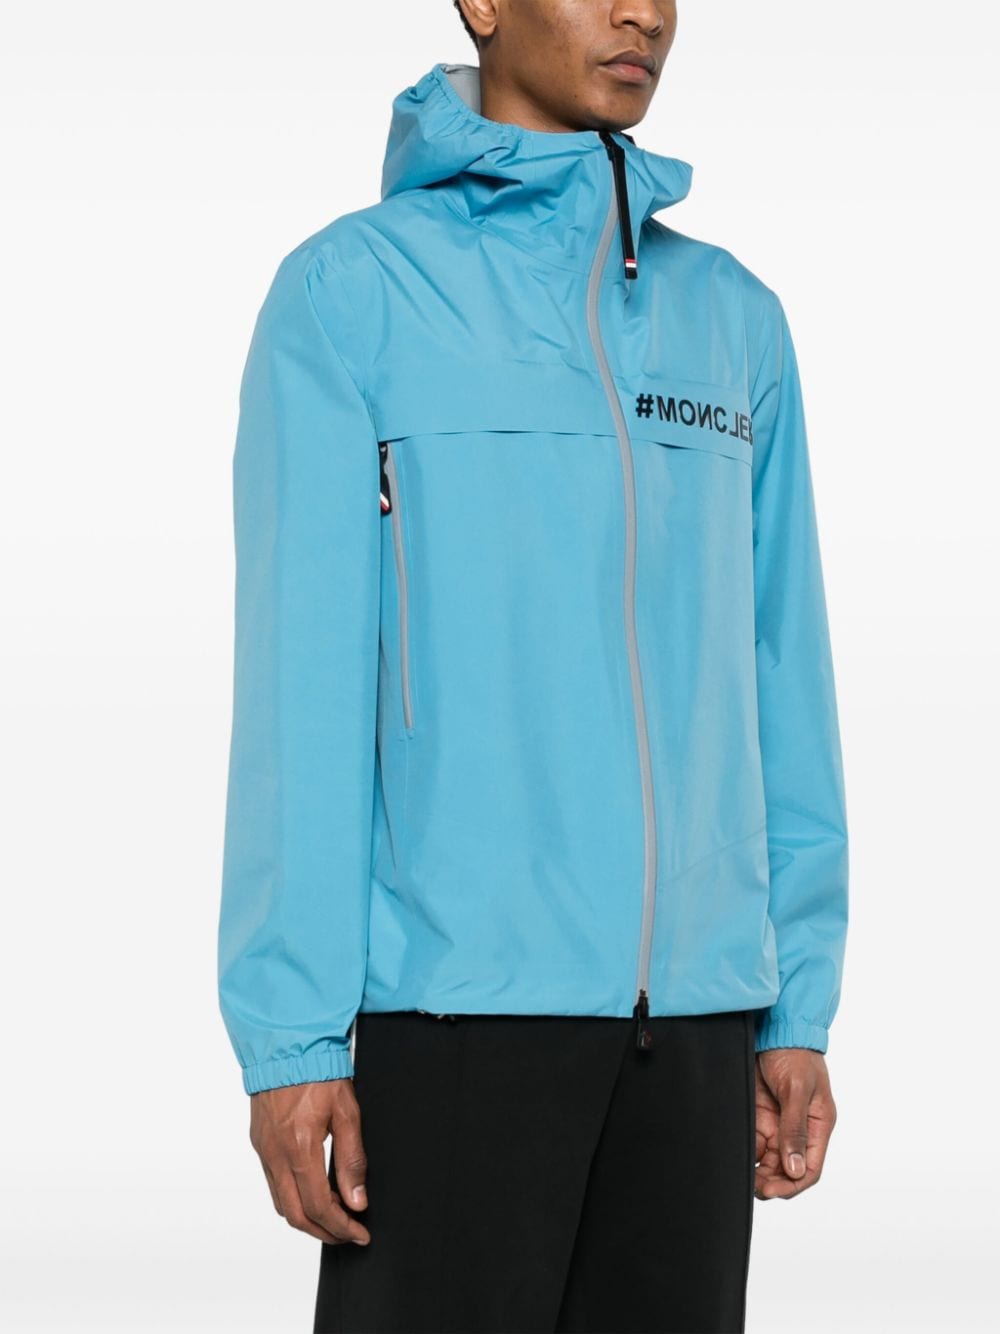 Shipton lightweight jacket<BR/><BR/><BR/>